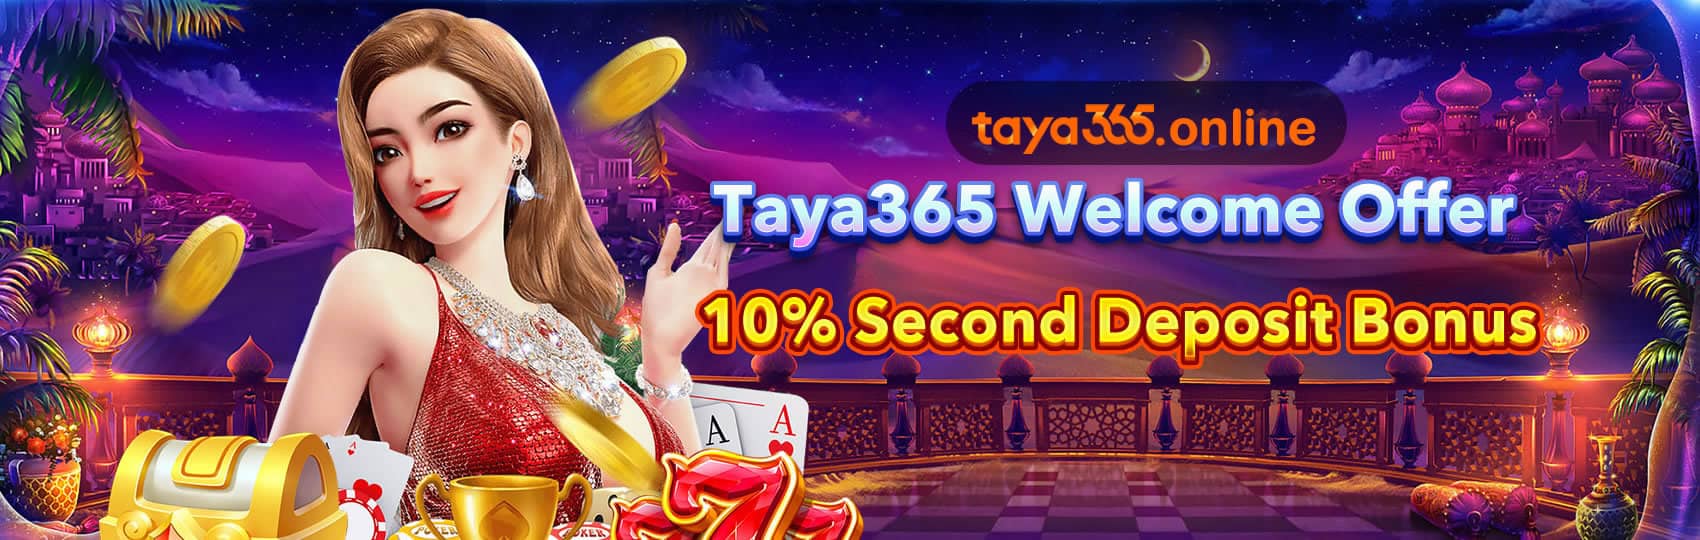 taya365 100% second deposit bonus